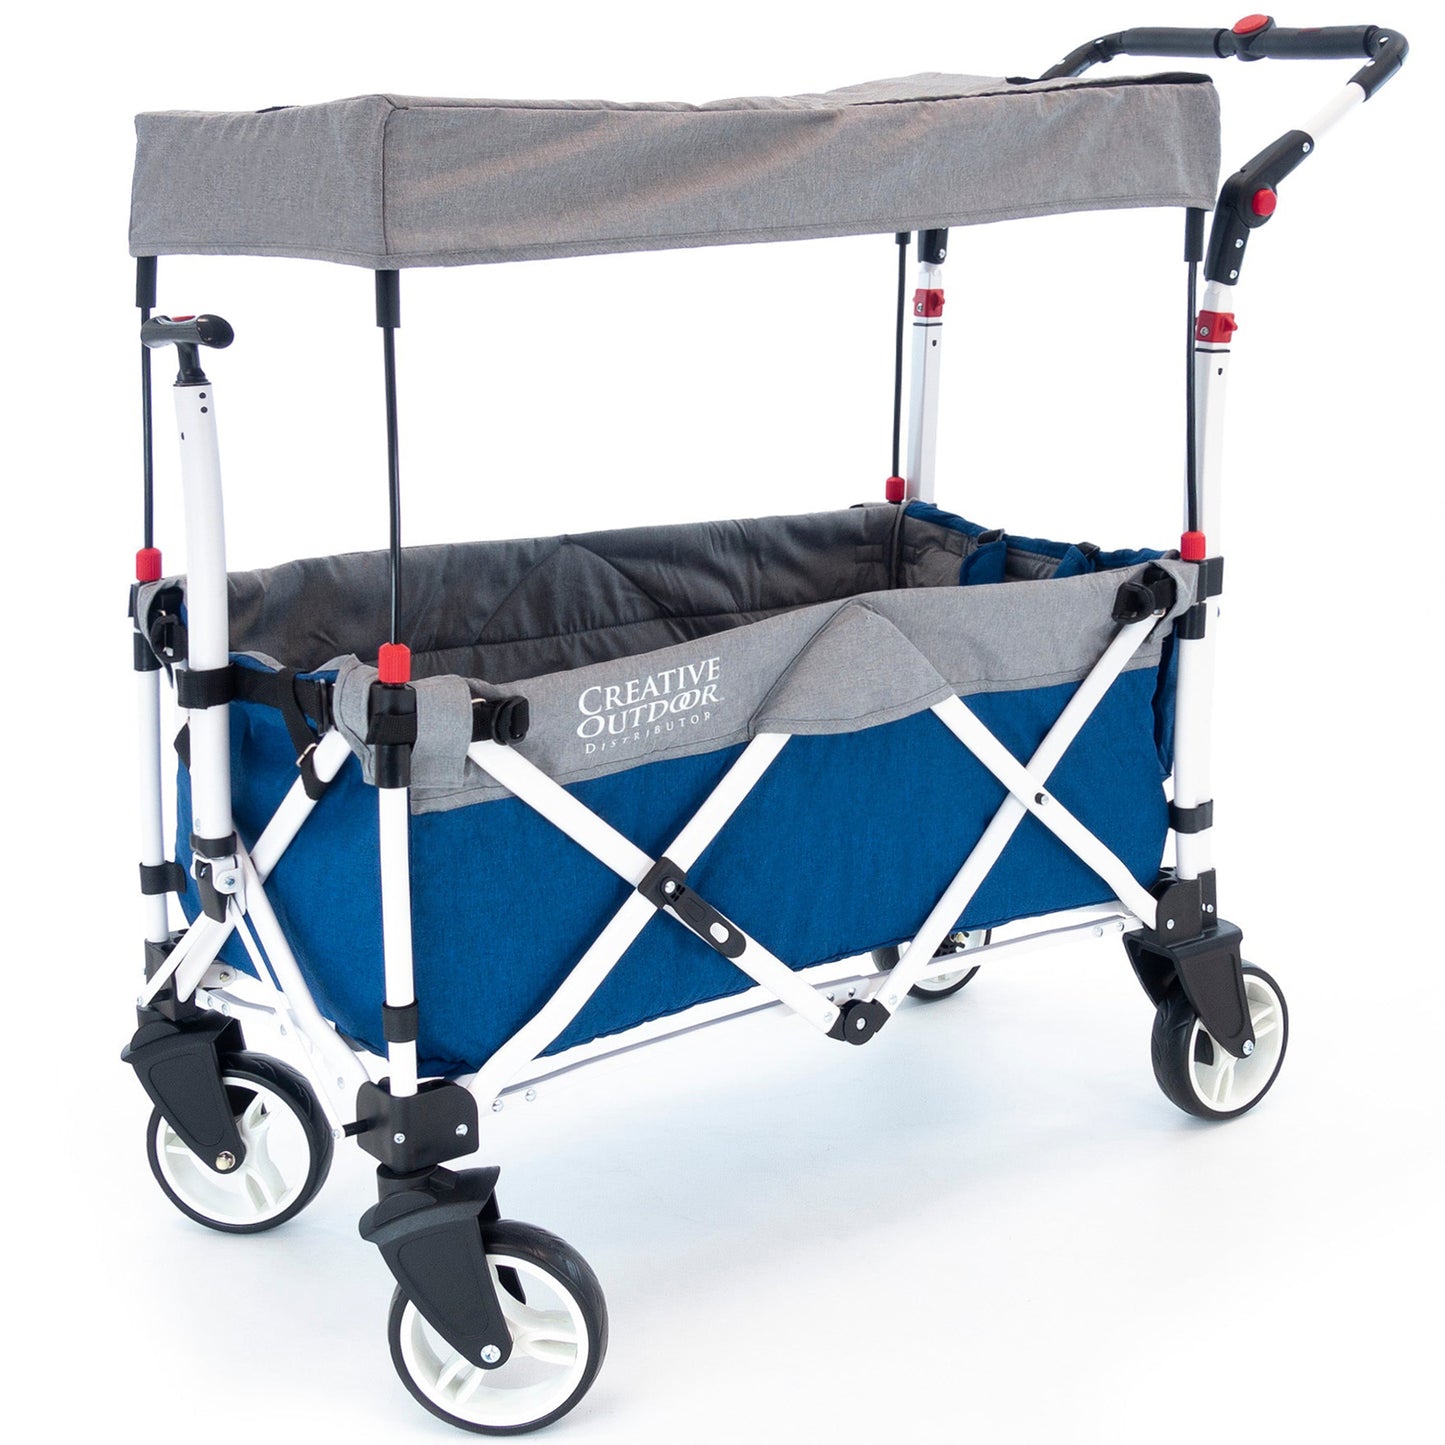 Pack & Push Compact Stroller Wagon - Creative Wagons